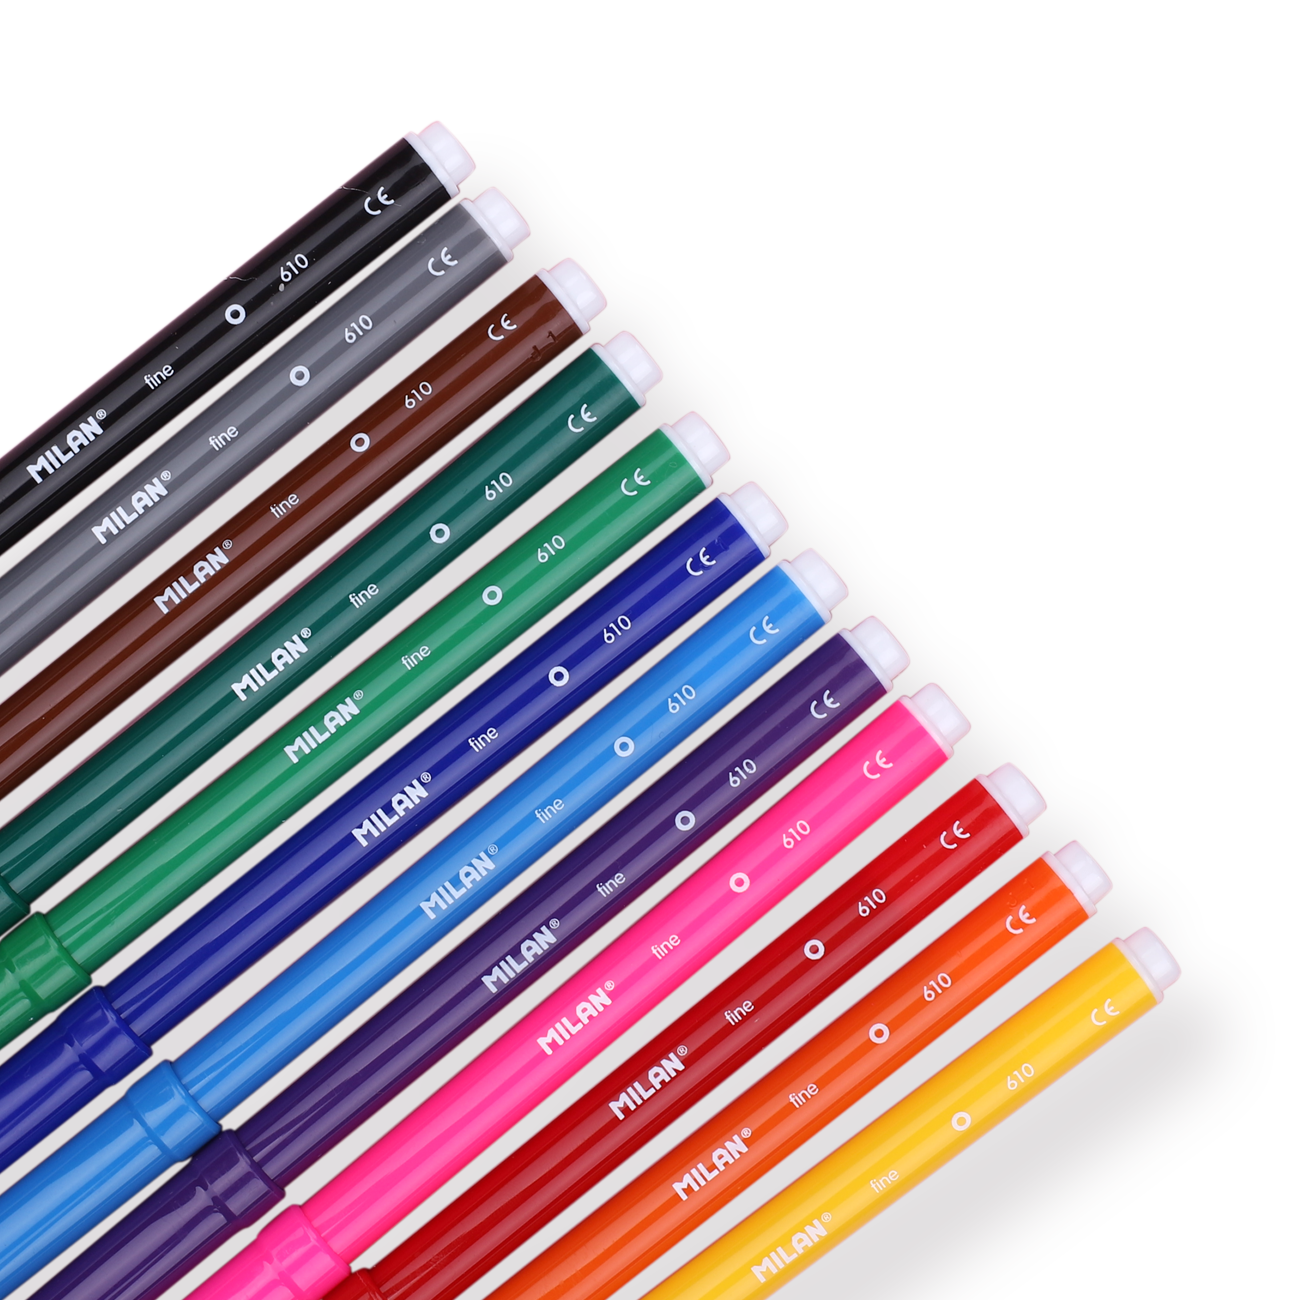 Milan Fibre Pens - Set of 12 - Stationery Pal